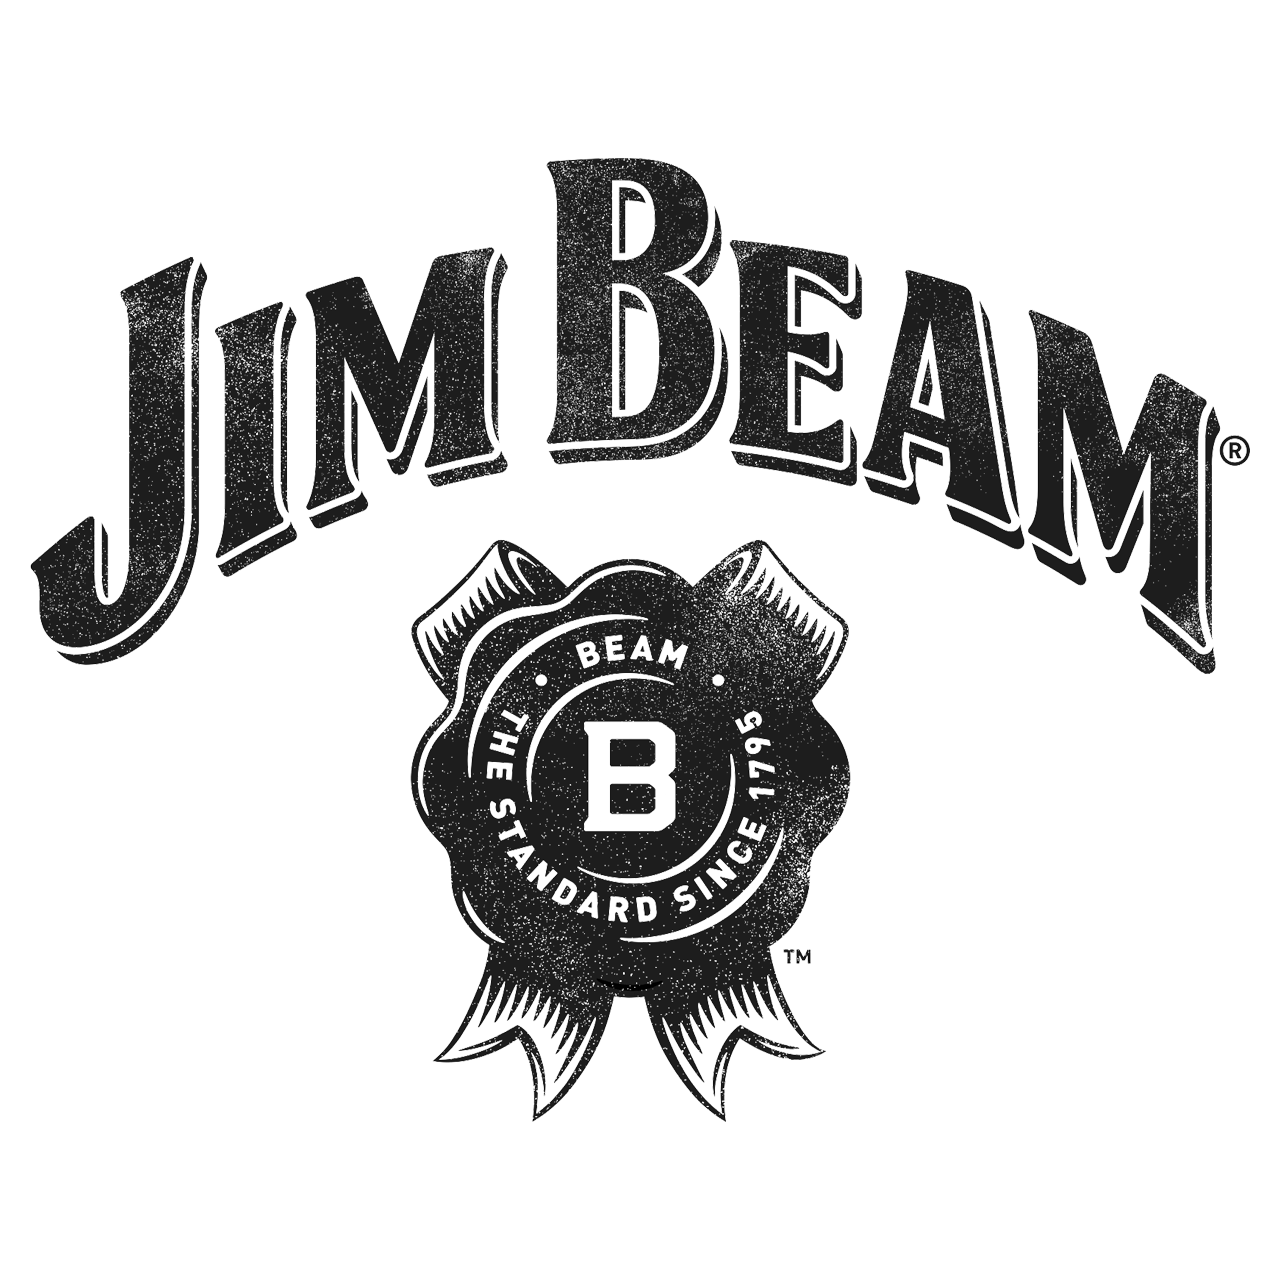 James Beam Distilling Co.